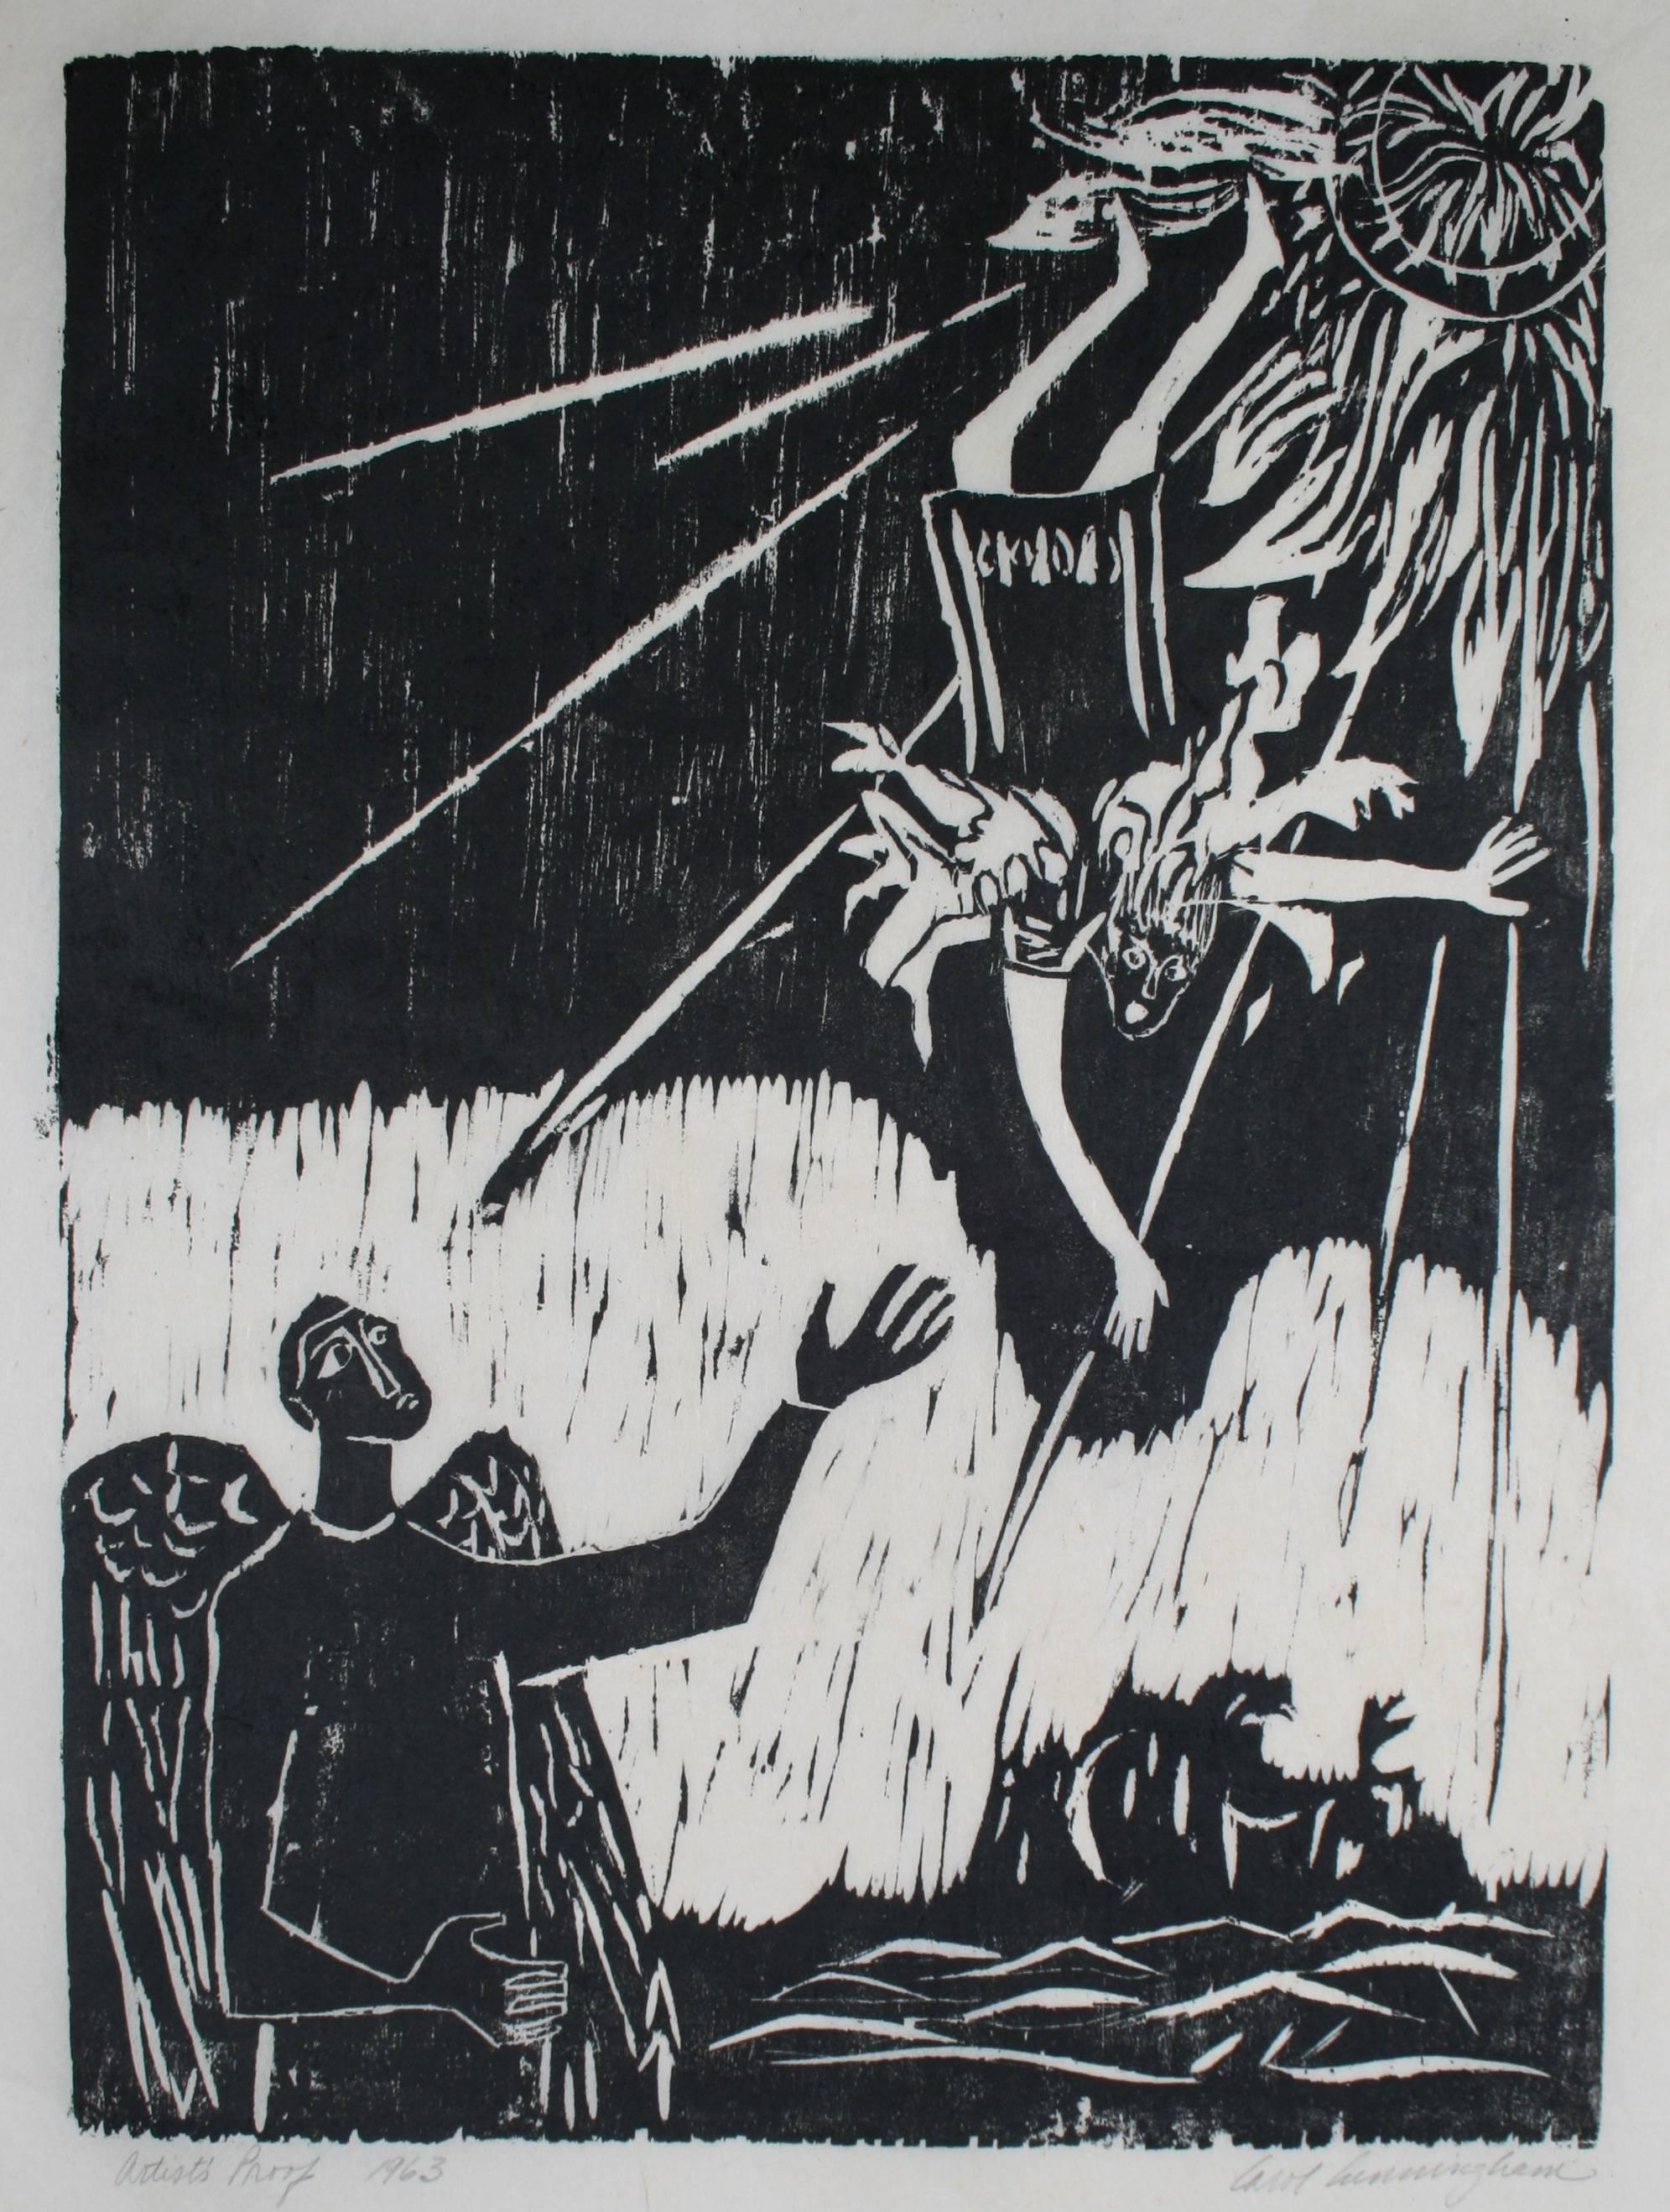 Carol Cunningham Figurative Print - "Daedalus & Icarus" Figurative Woodcut Print, 1963